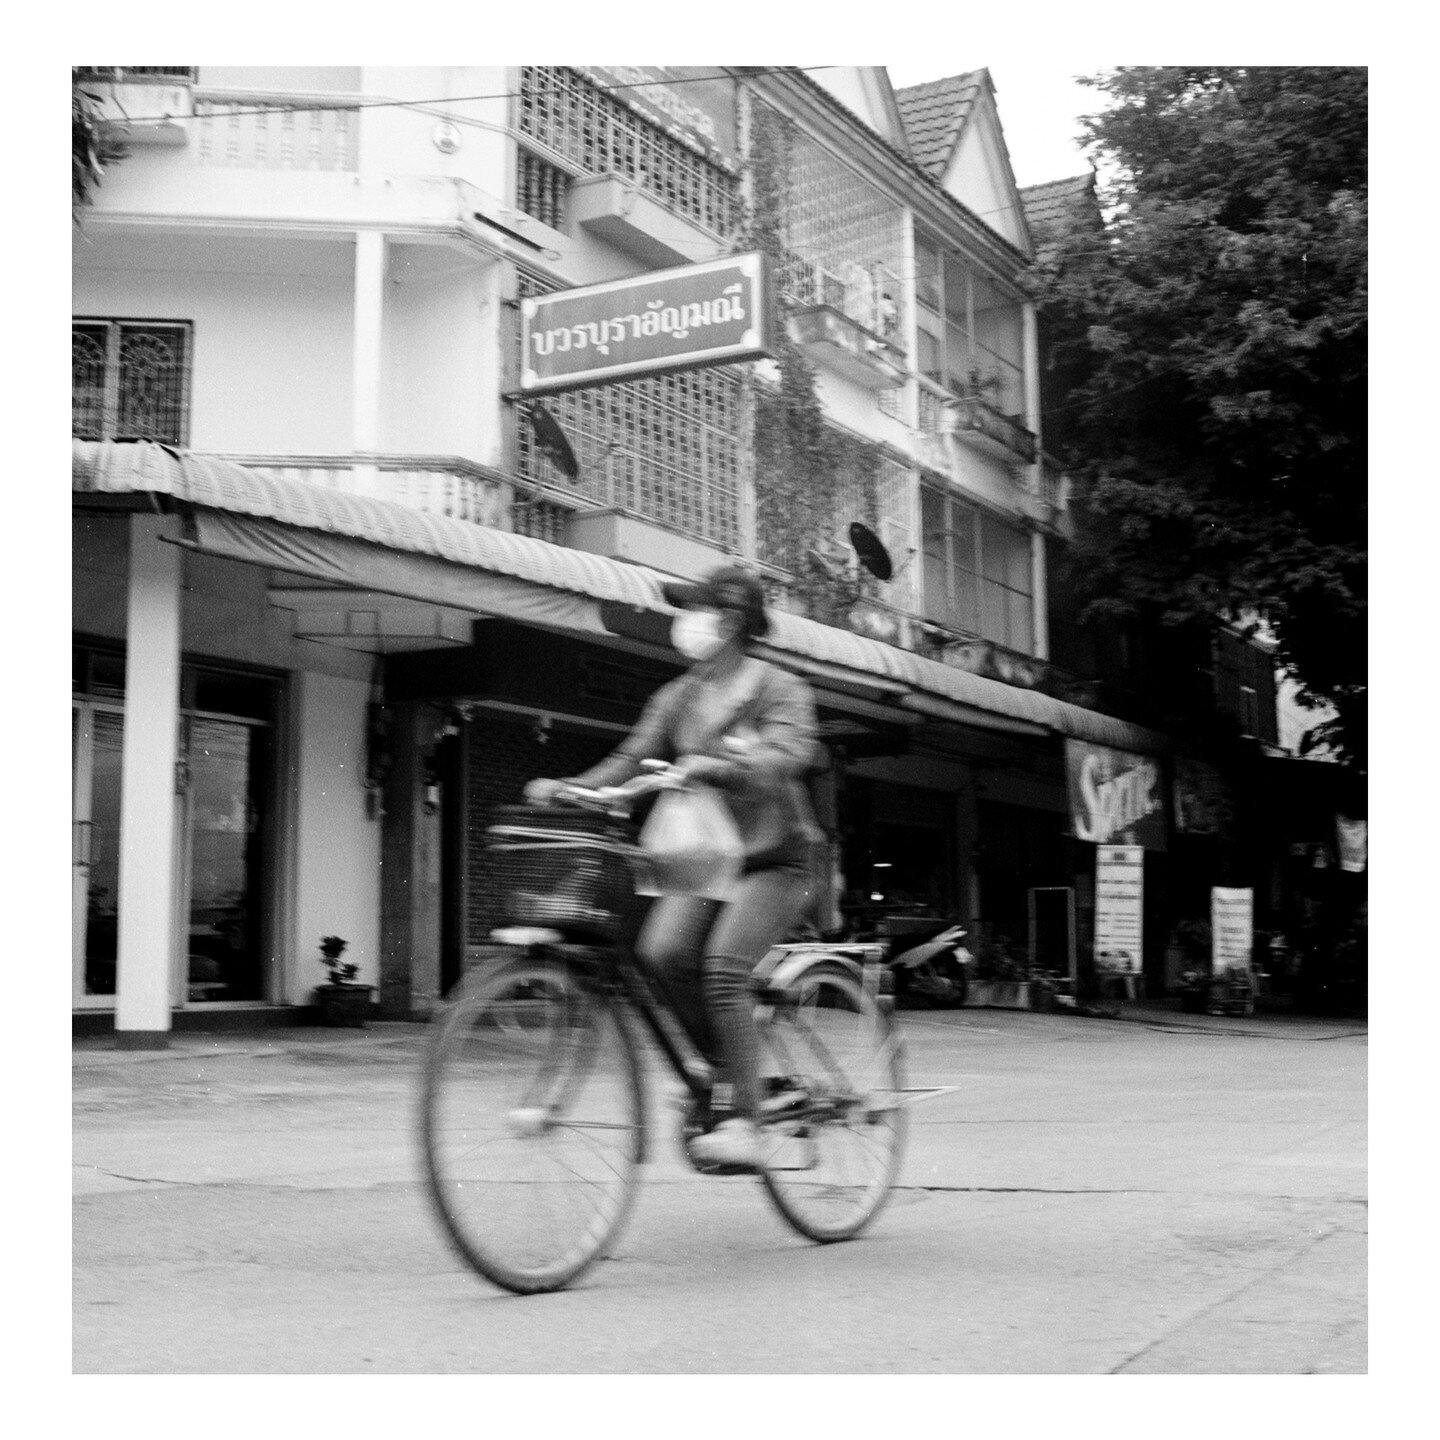 Bicycles | Mae Sot, Thailand

📷 Yashica Mat-124 G
🎞 Ilford HP5

#thailand #ilford #ilfordhp5 #shootfilm #filmisnotdead #staybrokeshootfilm #filmphotography #dcfilmcollective #mediumformat #yashica #yashicamat124g #120film #bw_perfect